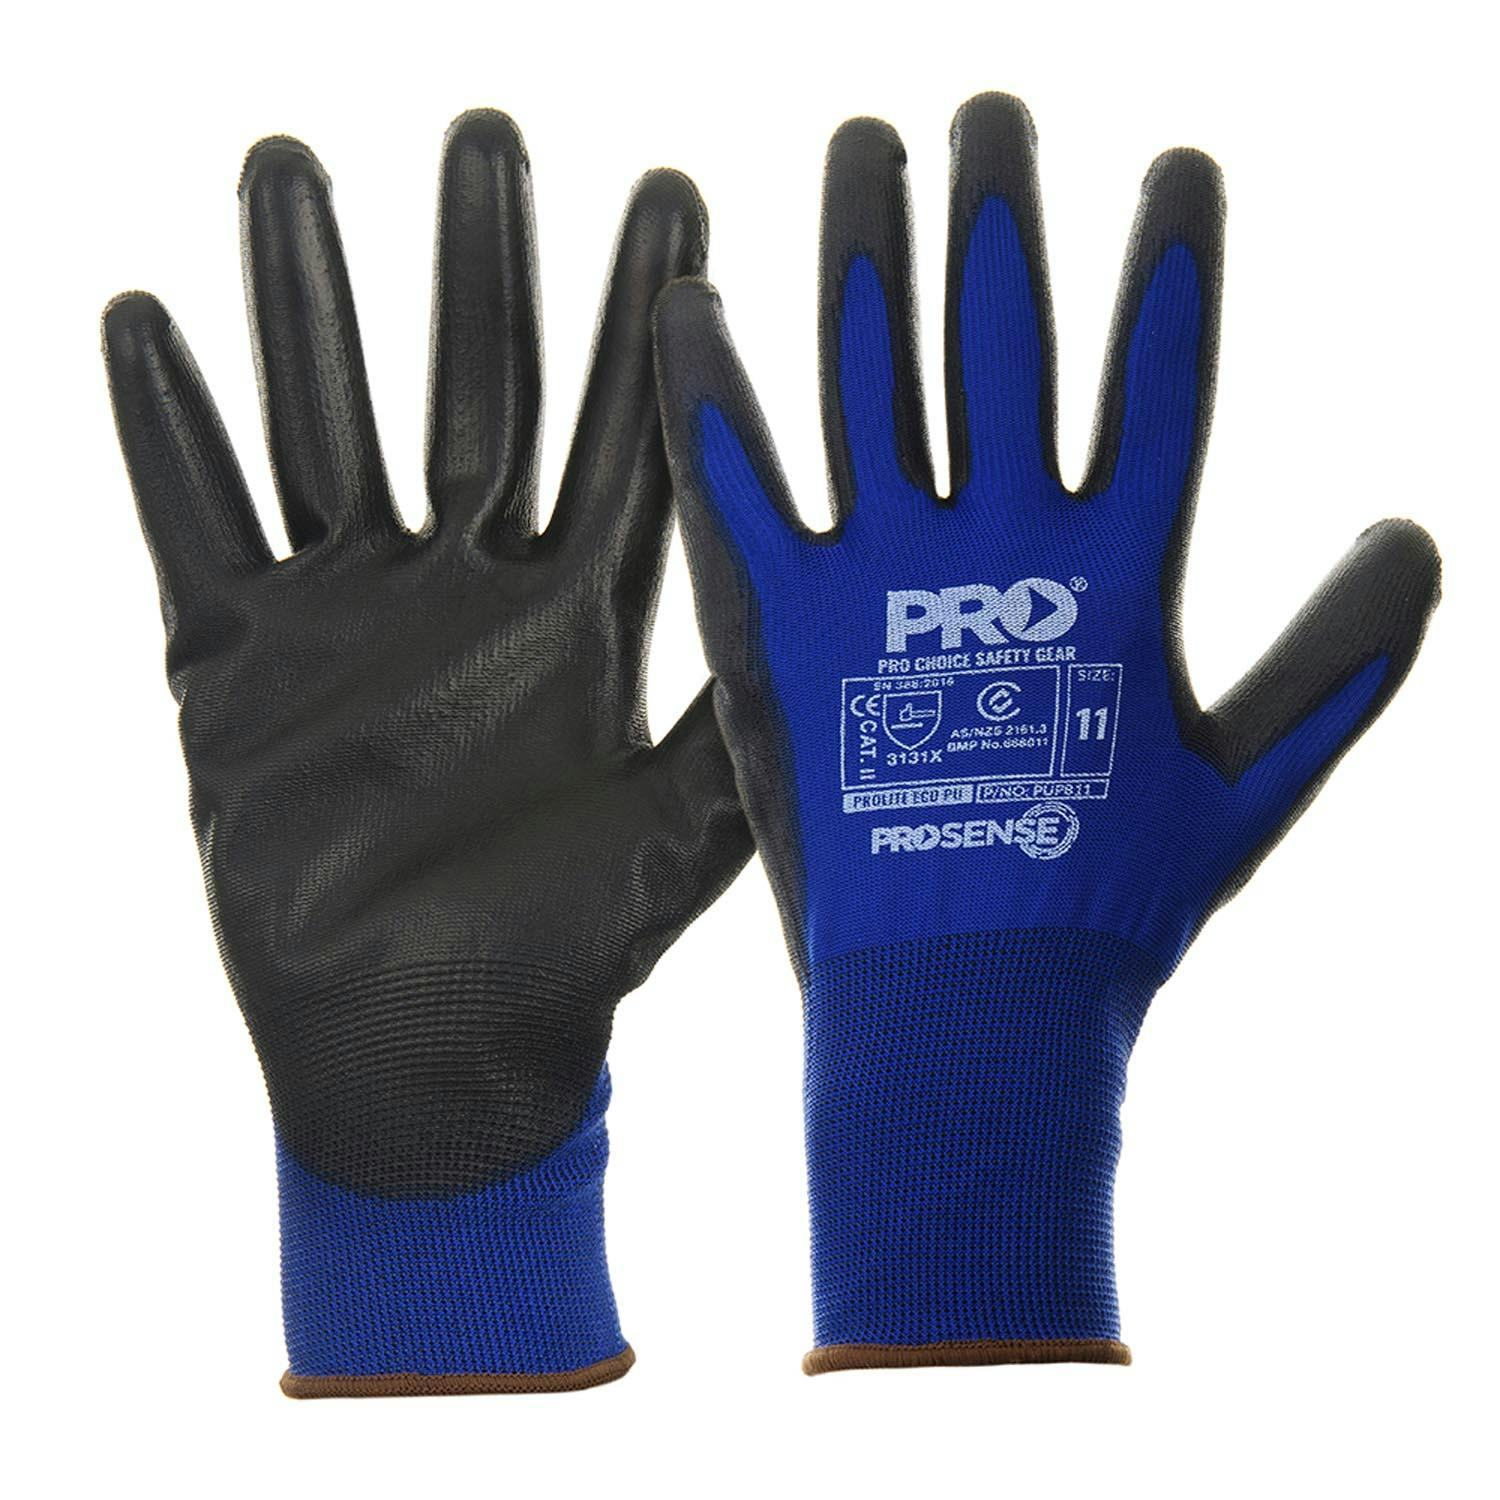 Pro Choice Prosense Prolite Eco Pu Glove 12Pr Bulk Pack_3